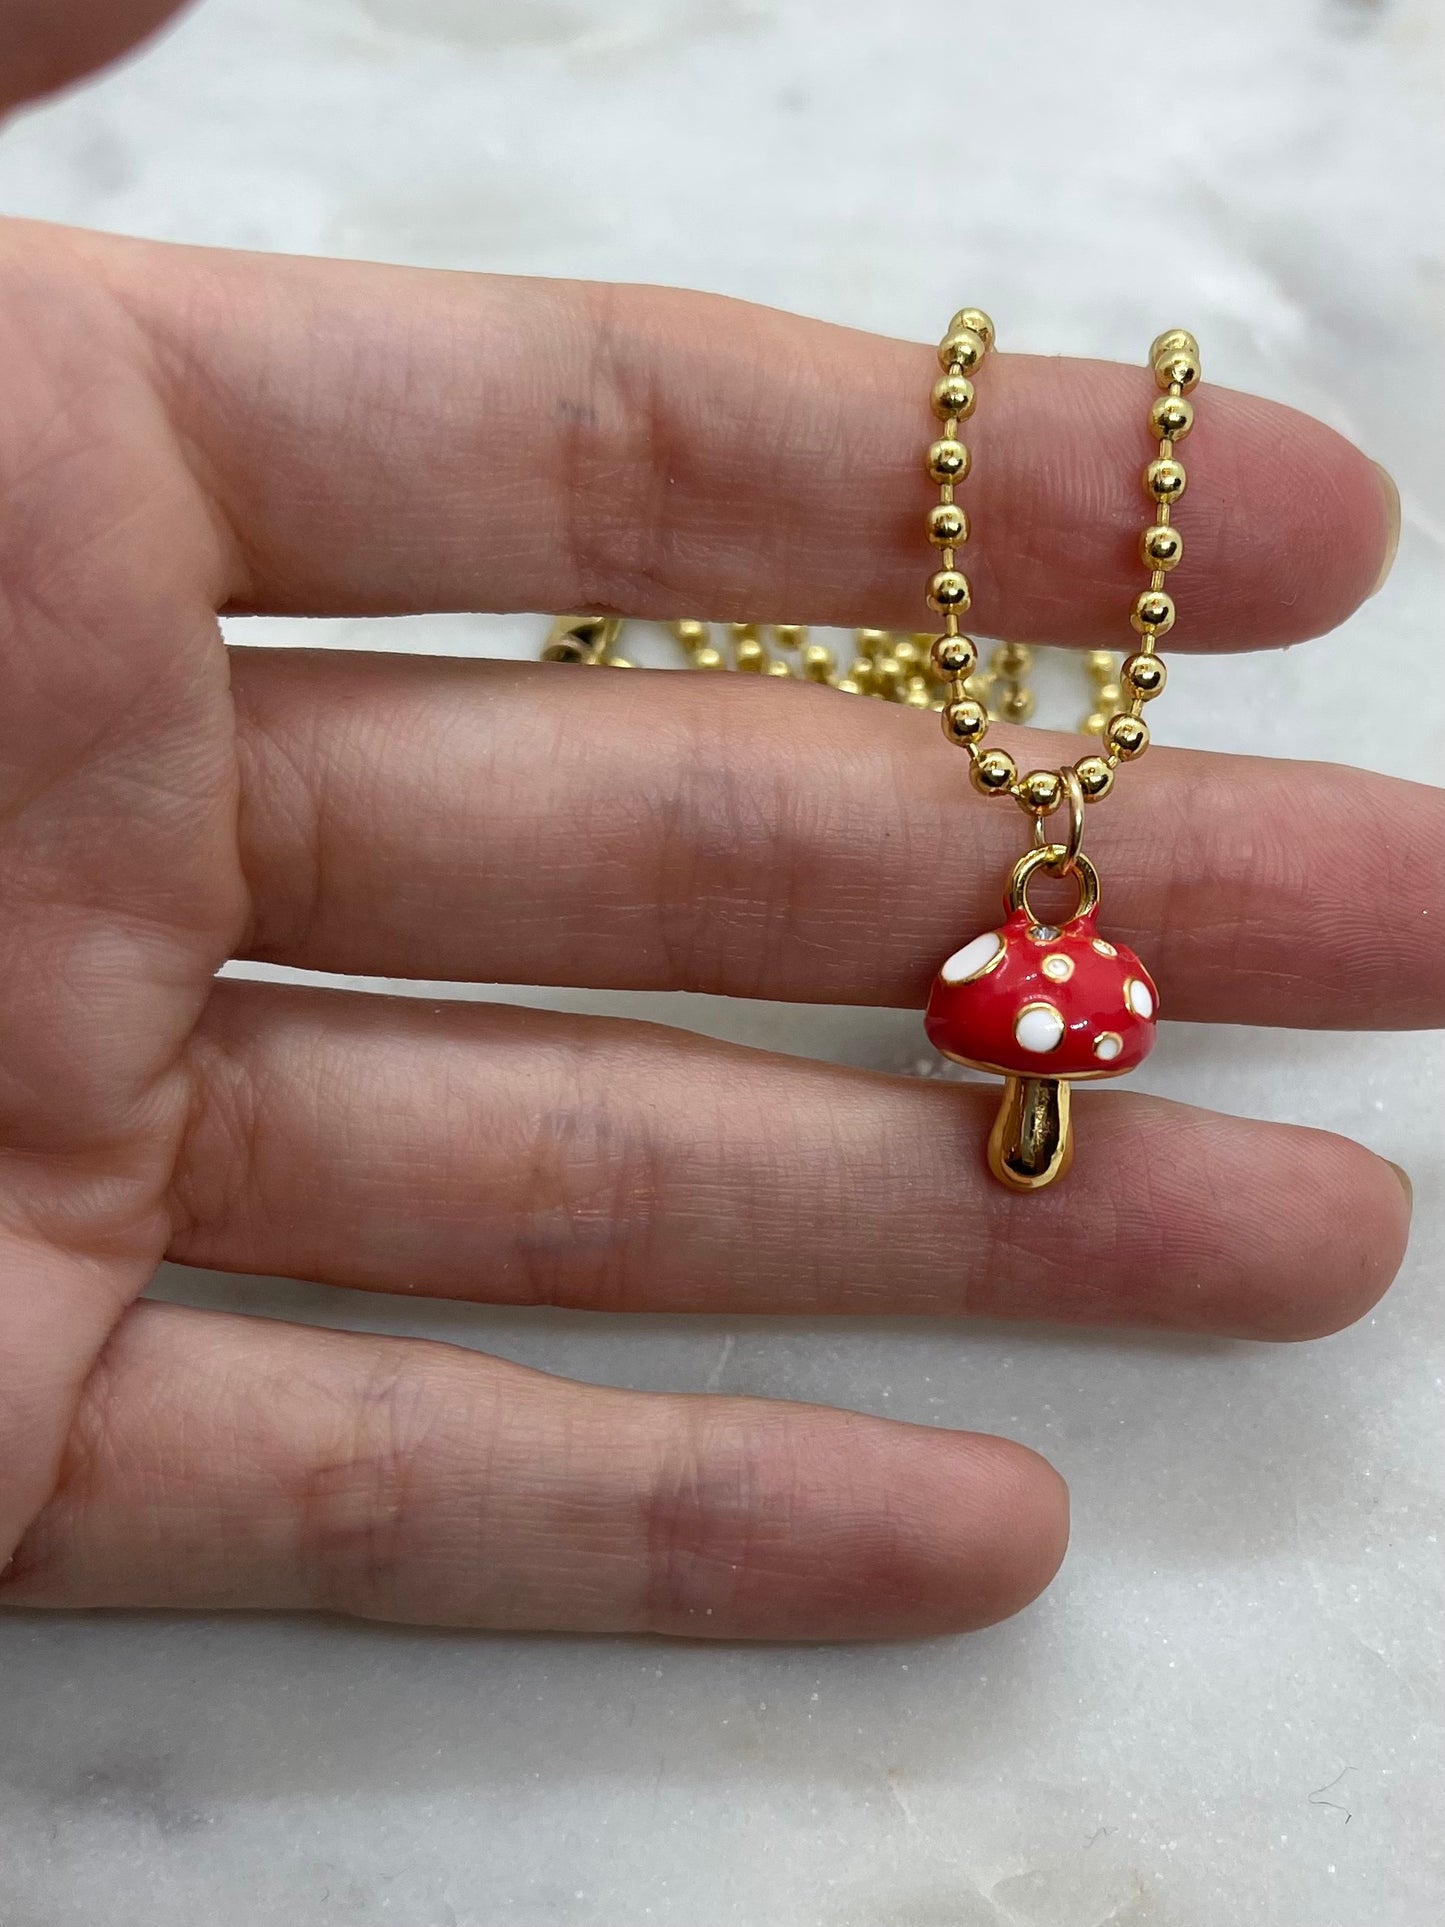 Mushroom Necklace